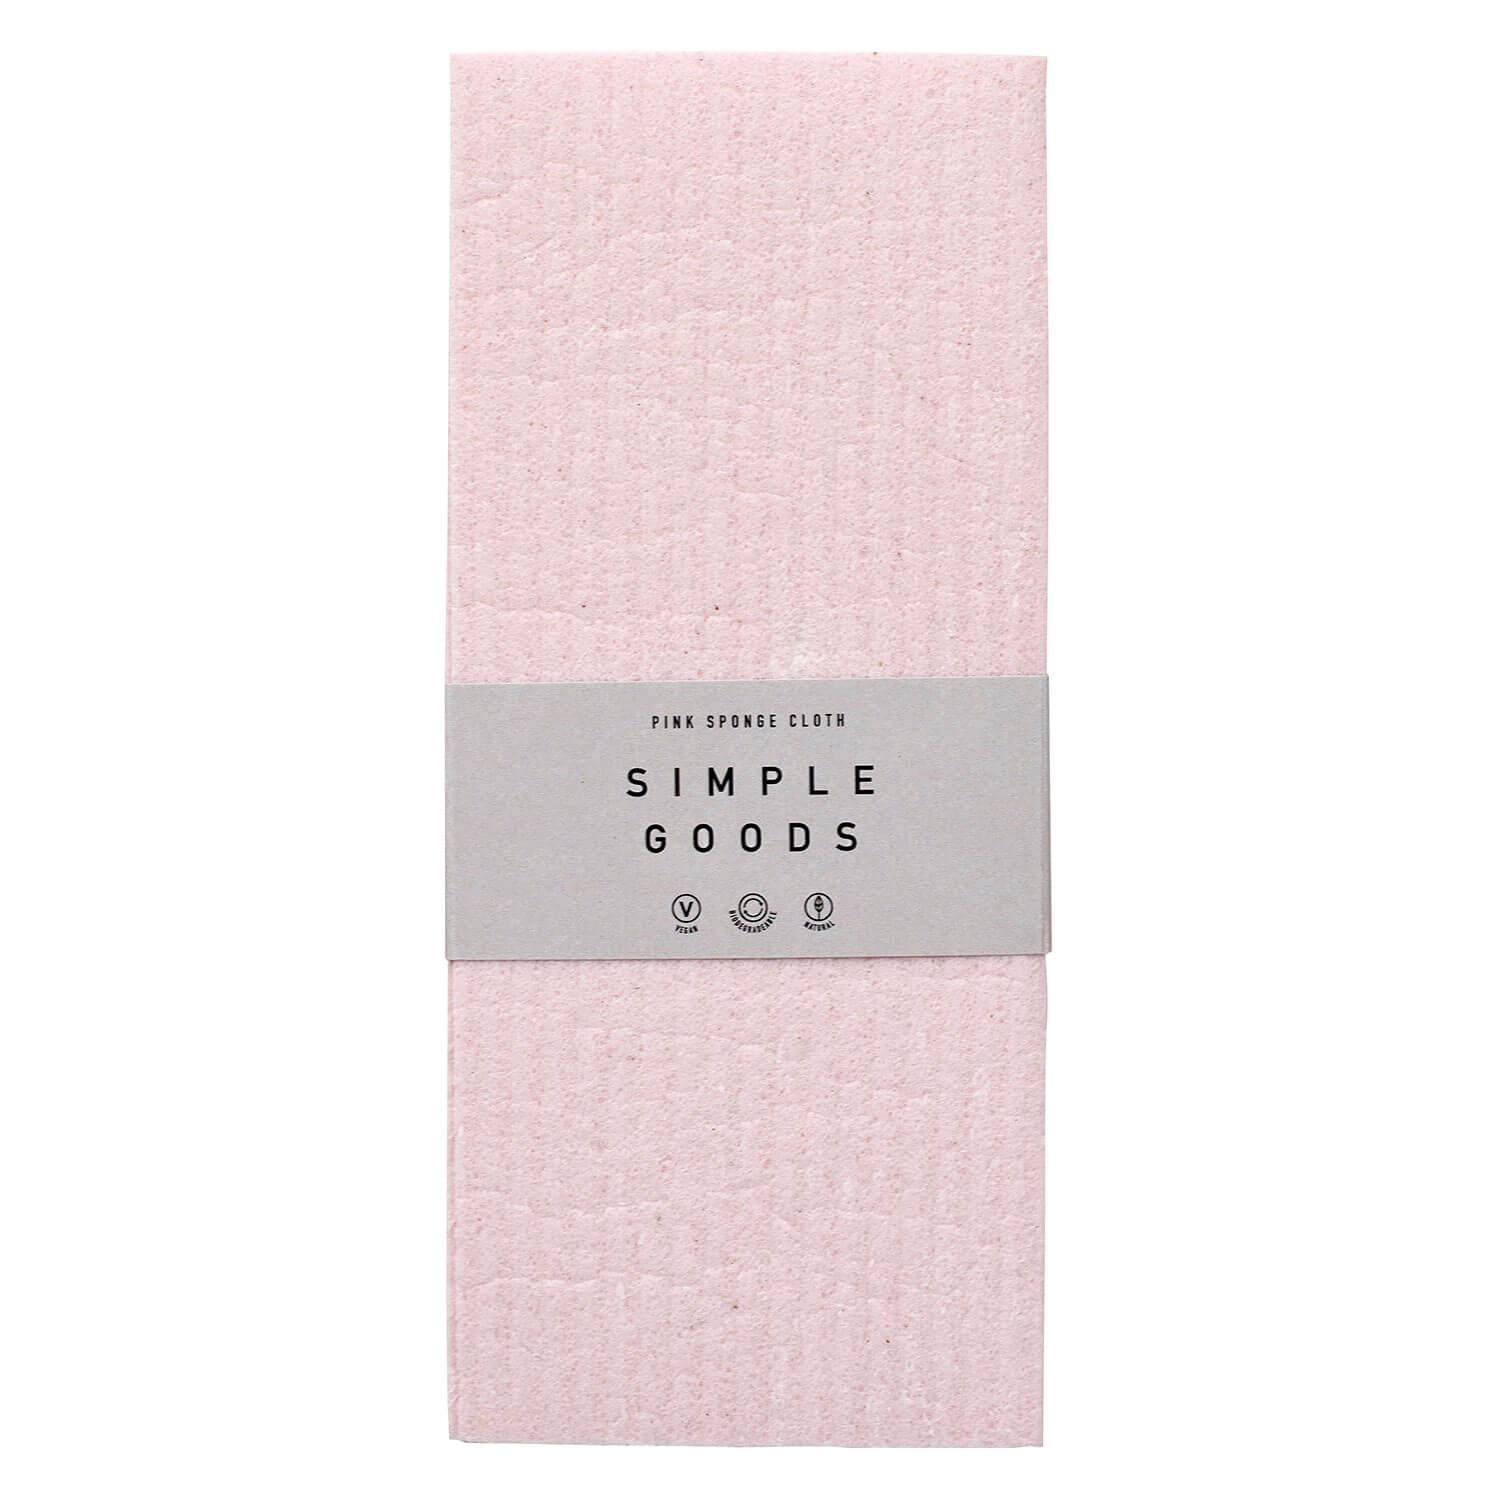 SIMPLE GOODS - Sponge Cloth Pink